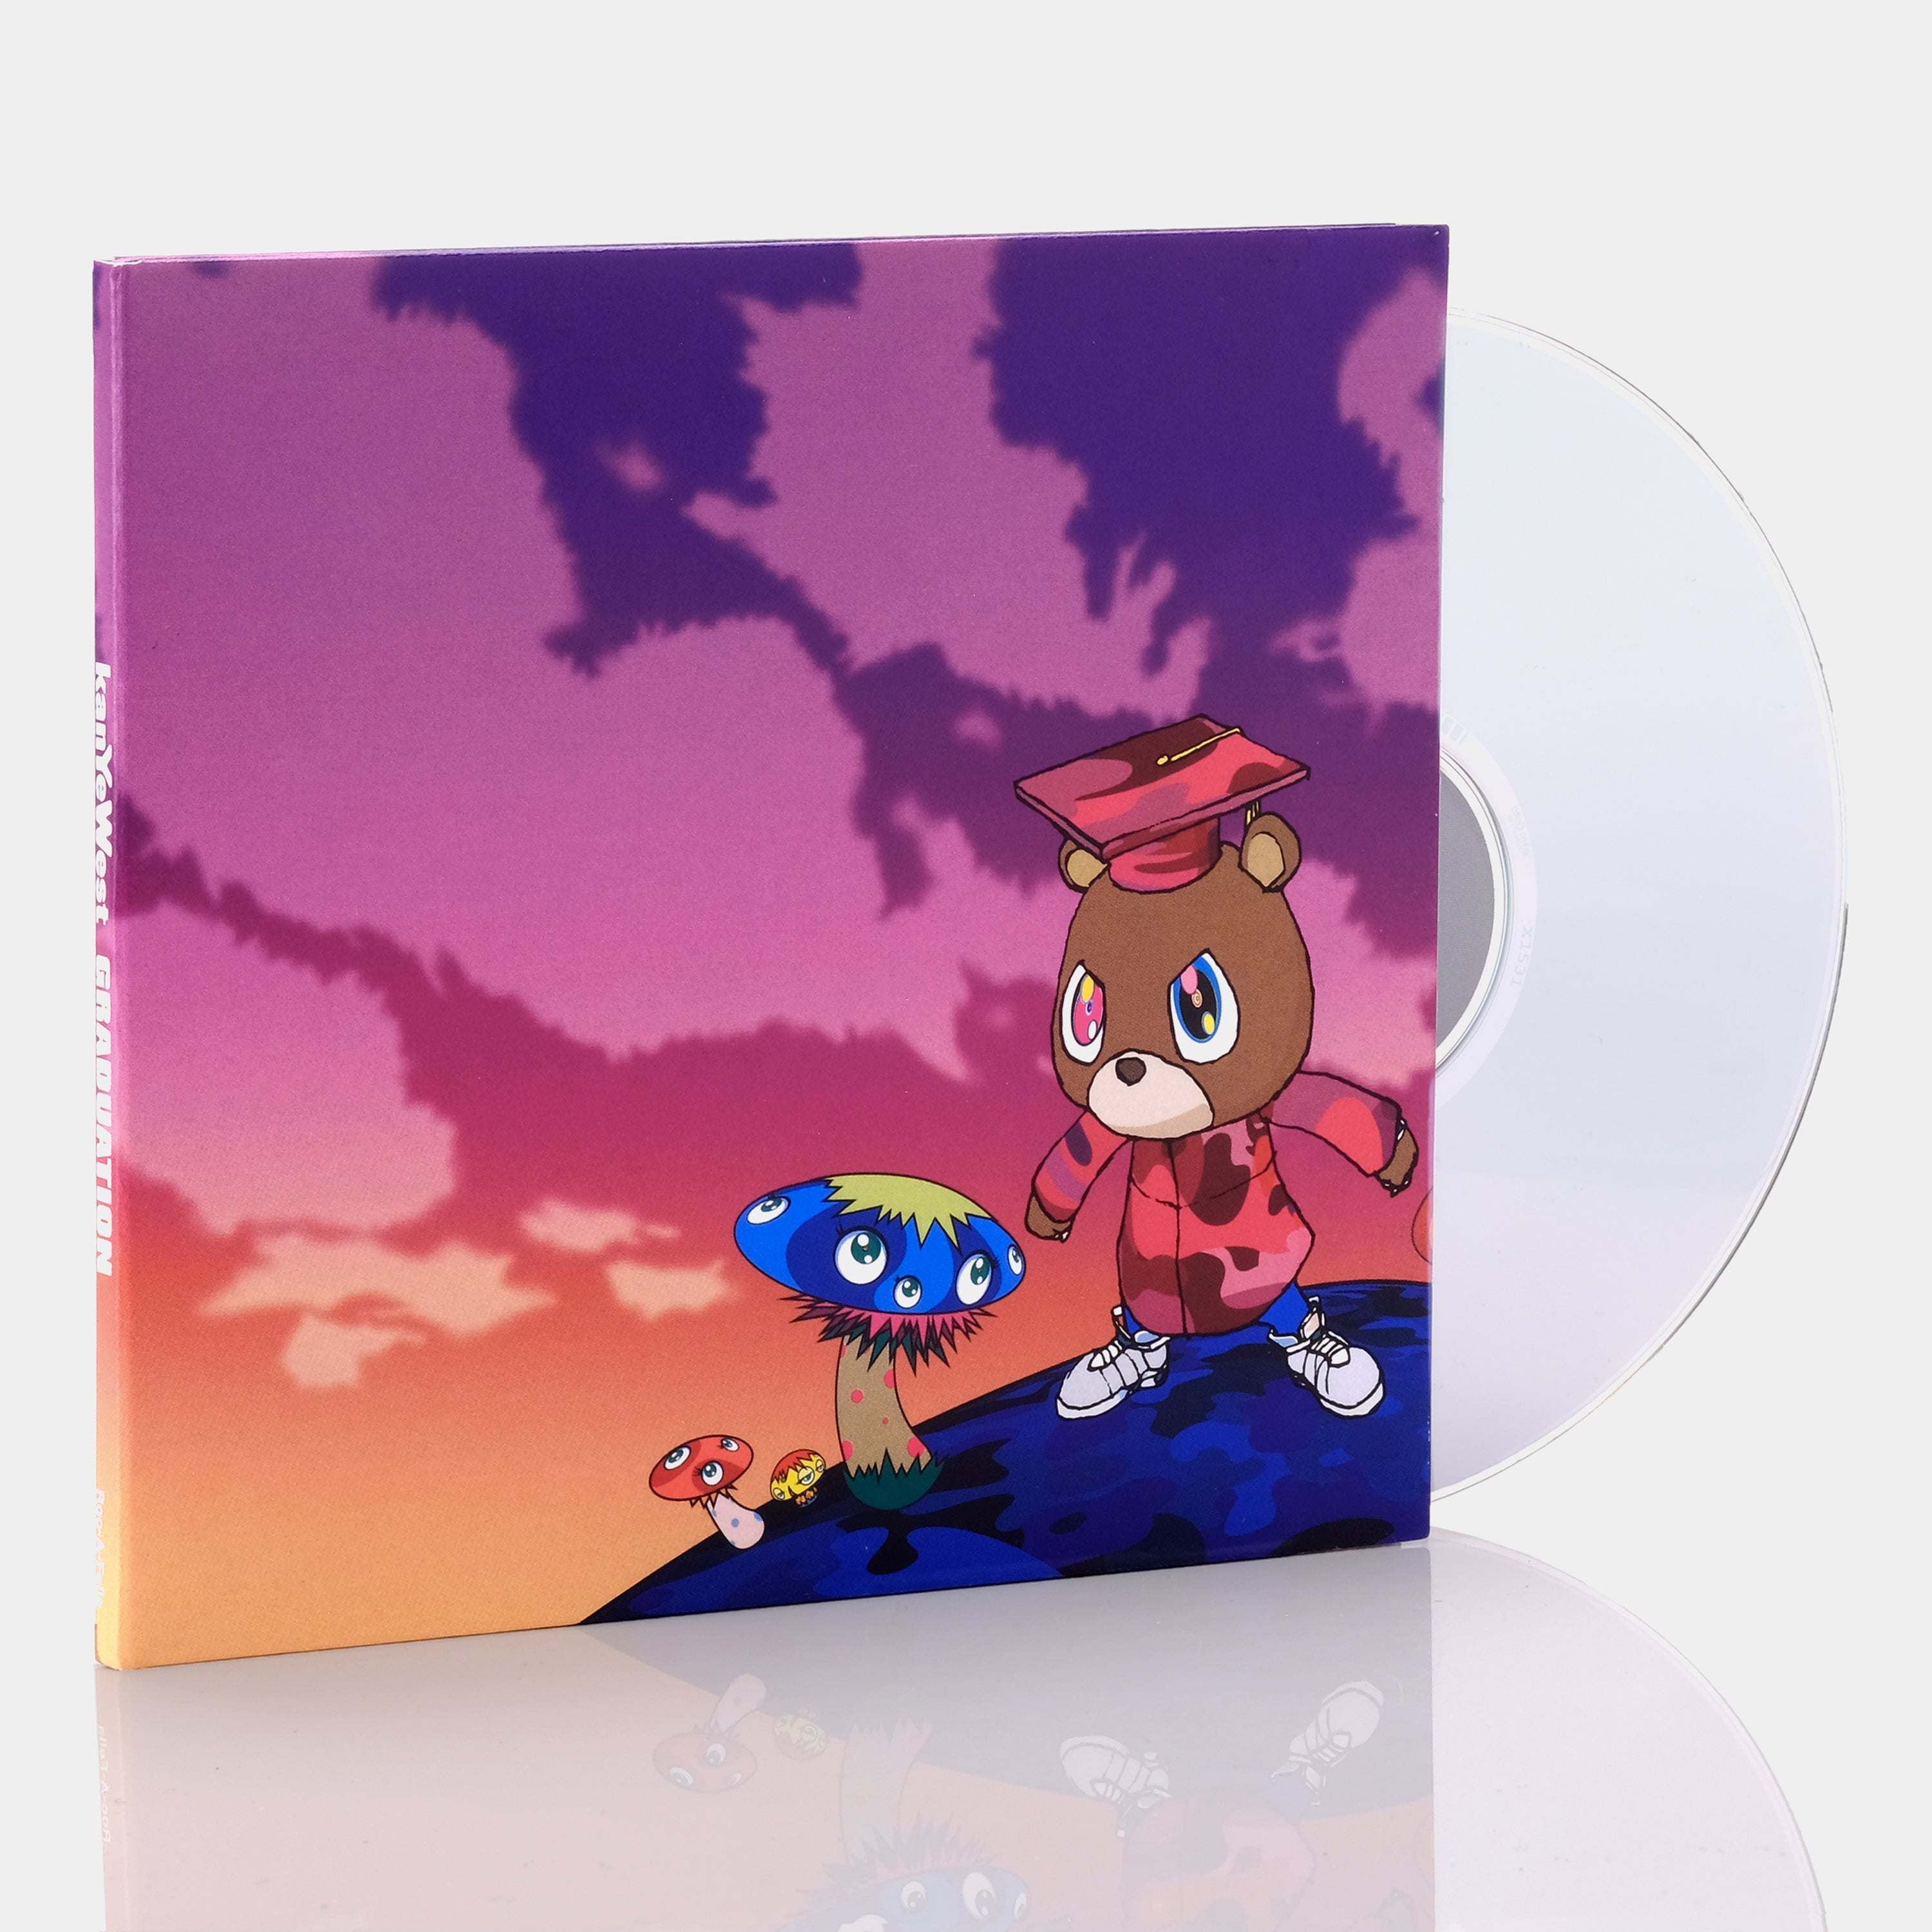 Kanye West - Graduation (Clean) CD